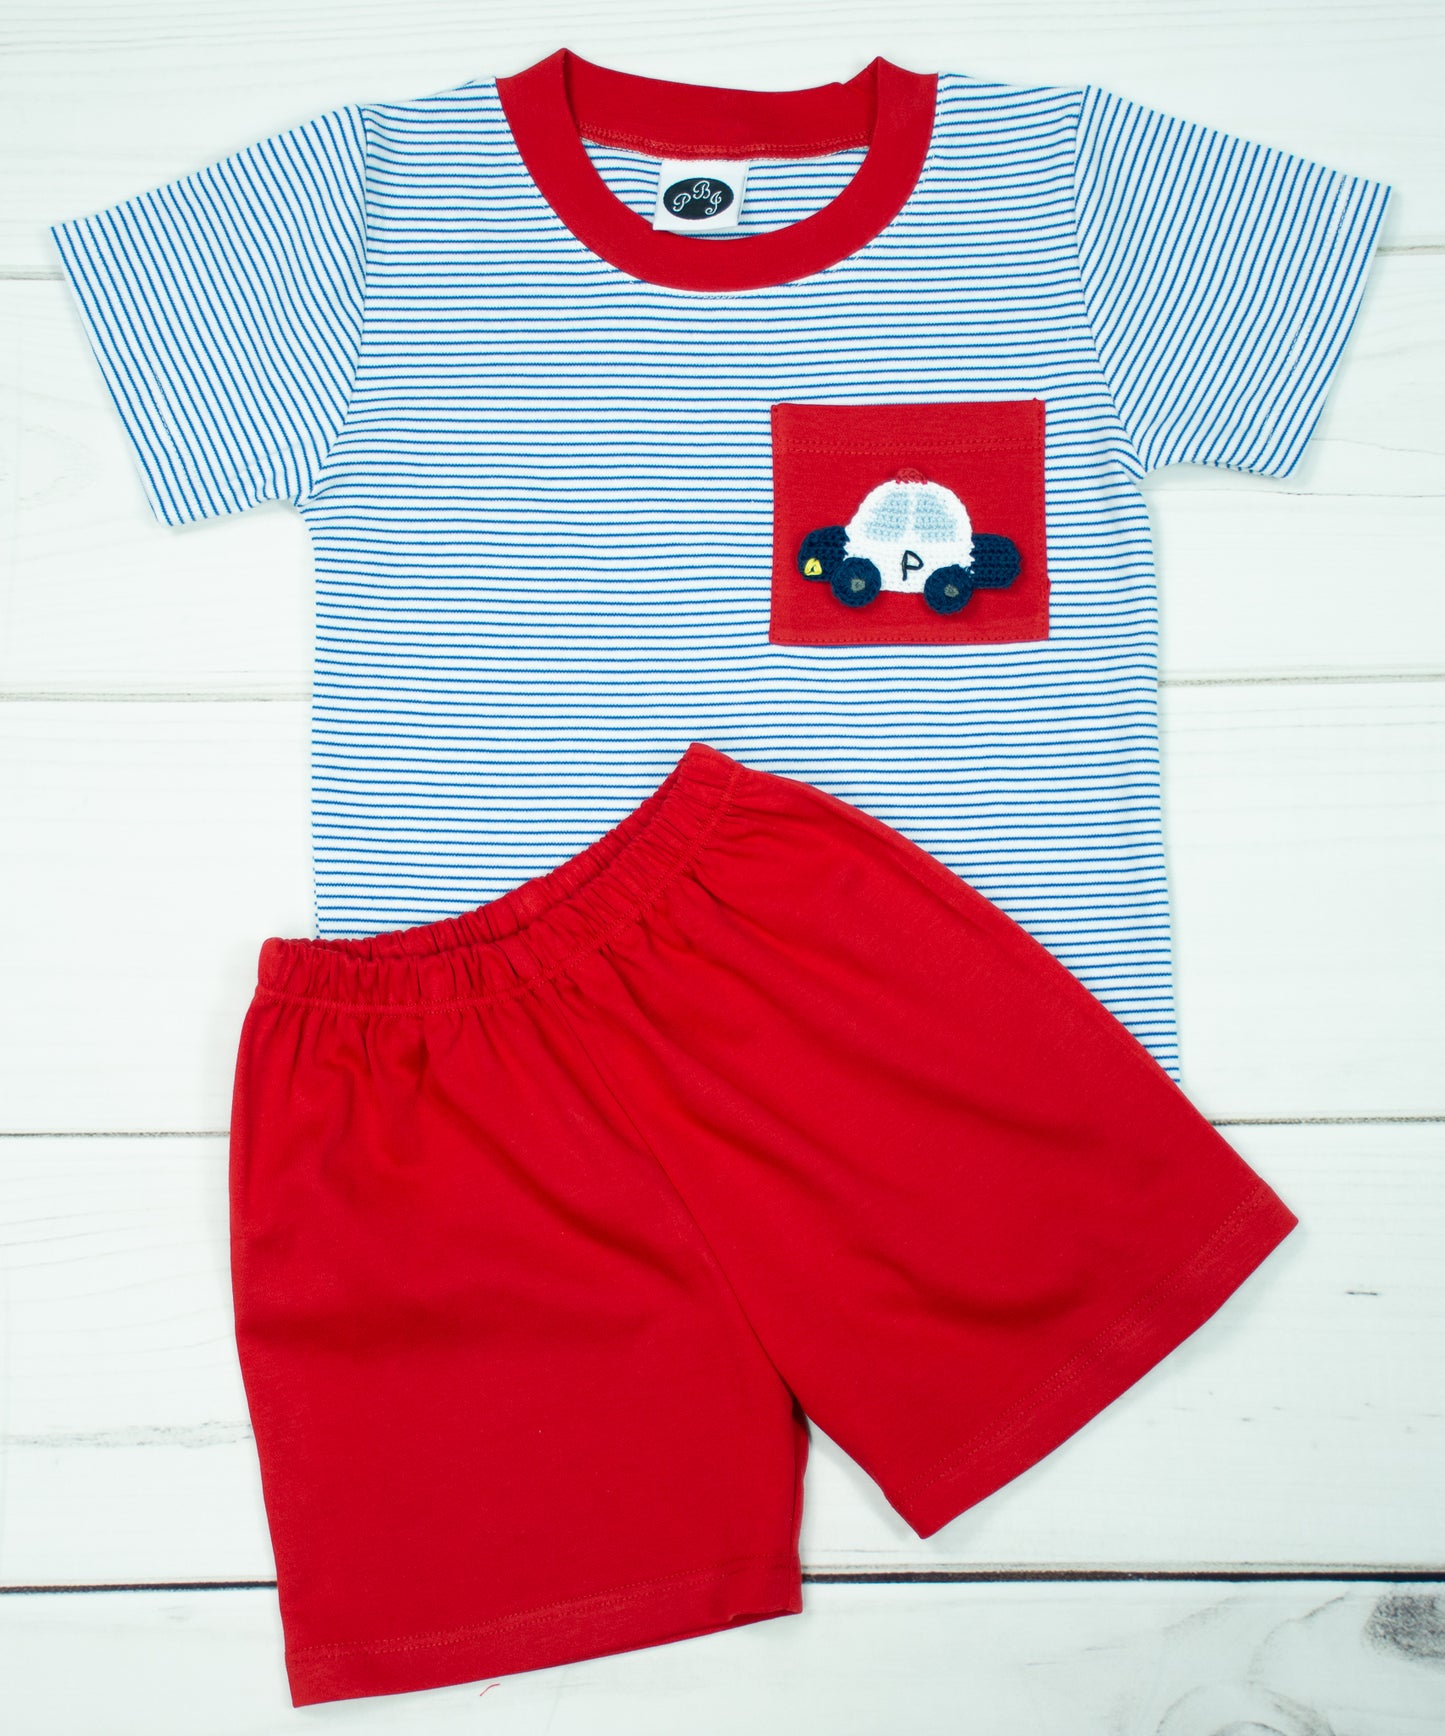 Pima Royal stripes pocket set/ red contrast and shorts